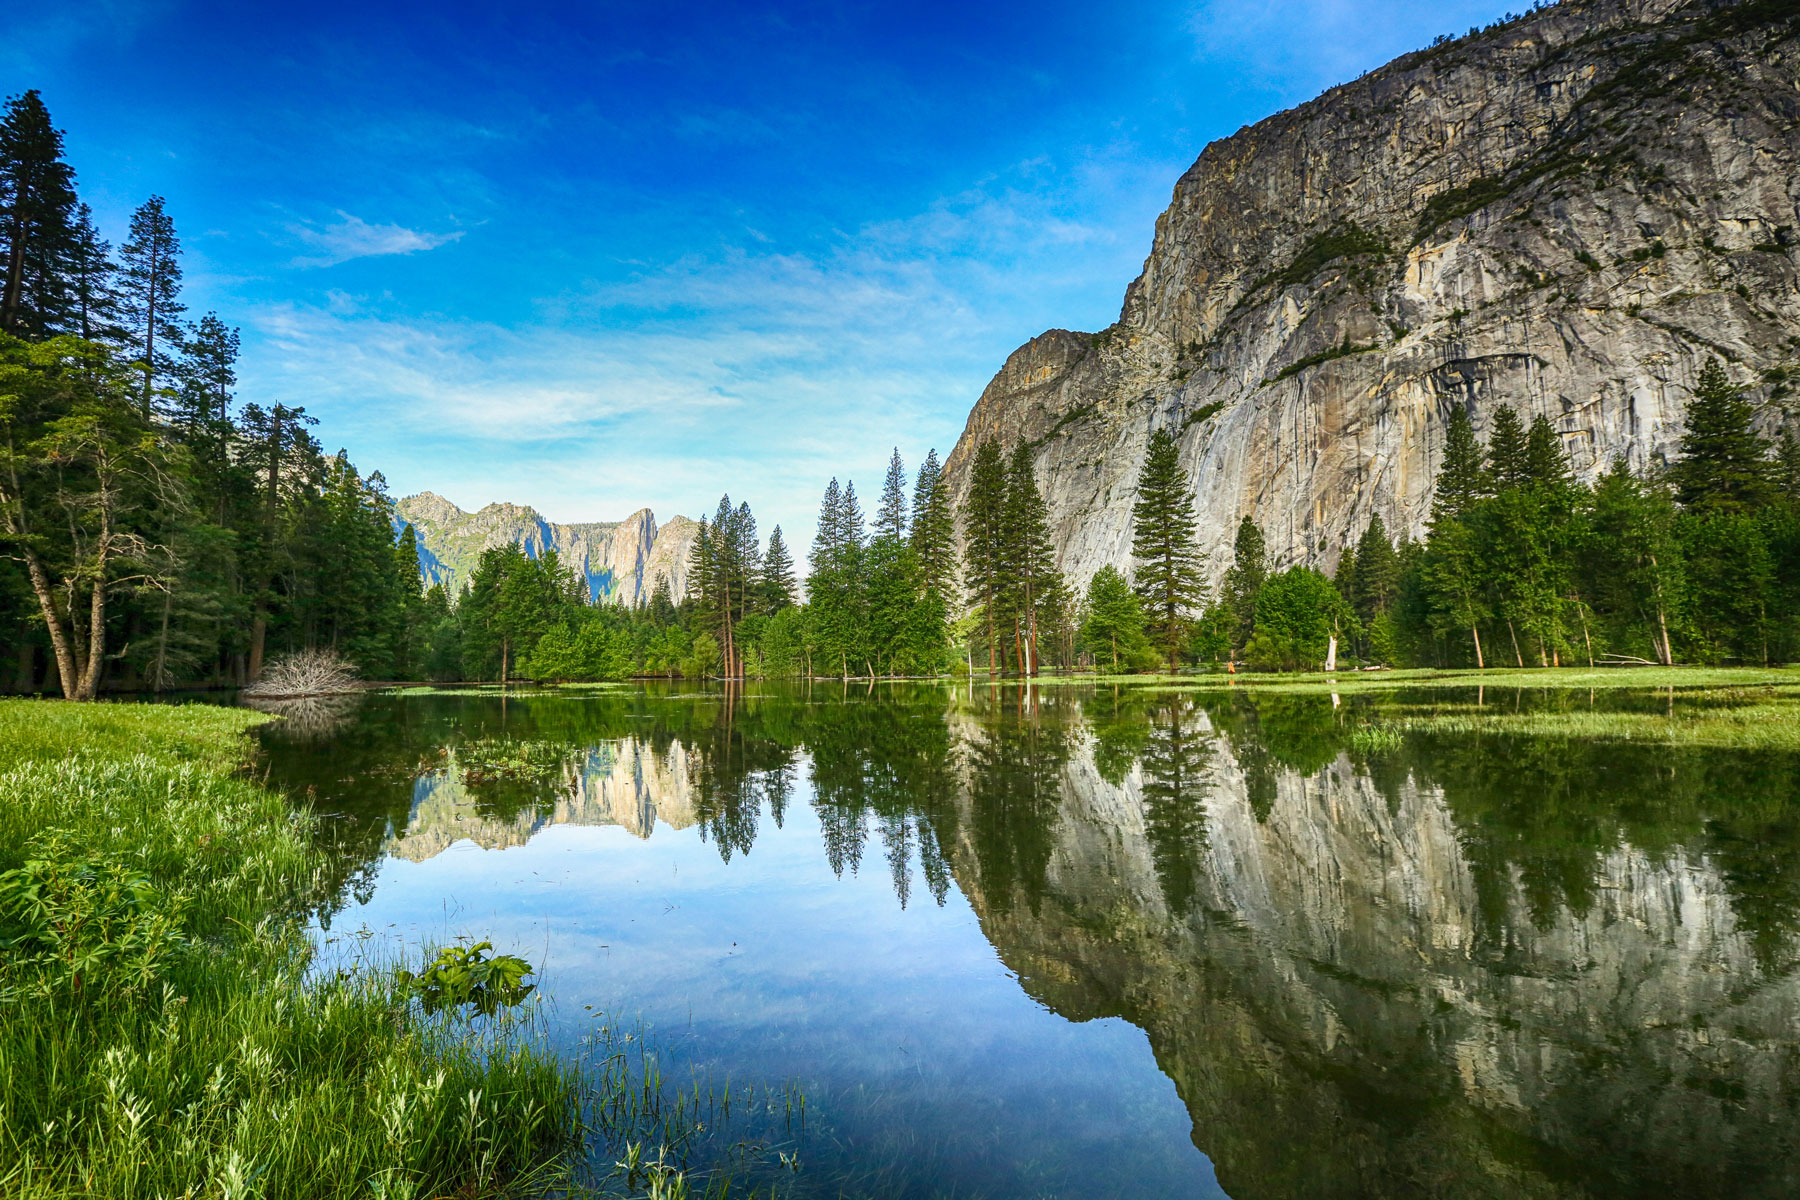 A breathtaking mountain landscape with water, lush greenery, and abundant trees epitomizes nature's splendid beauty.